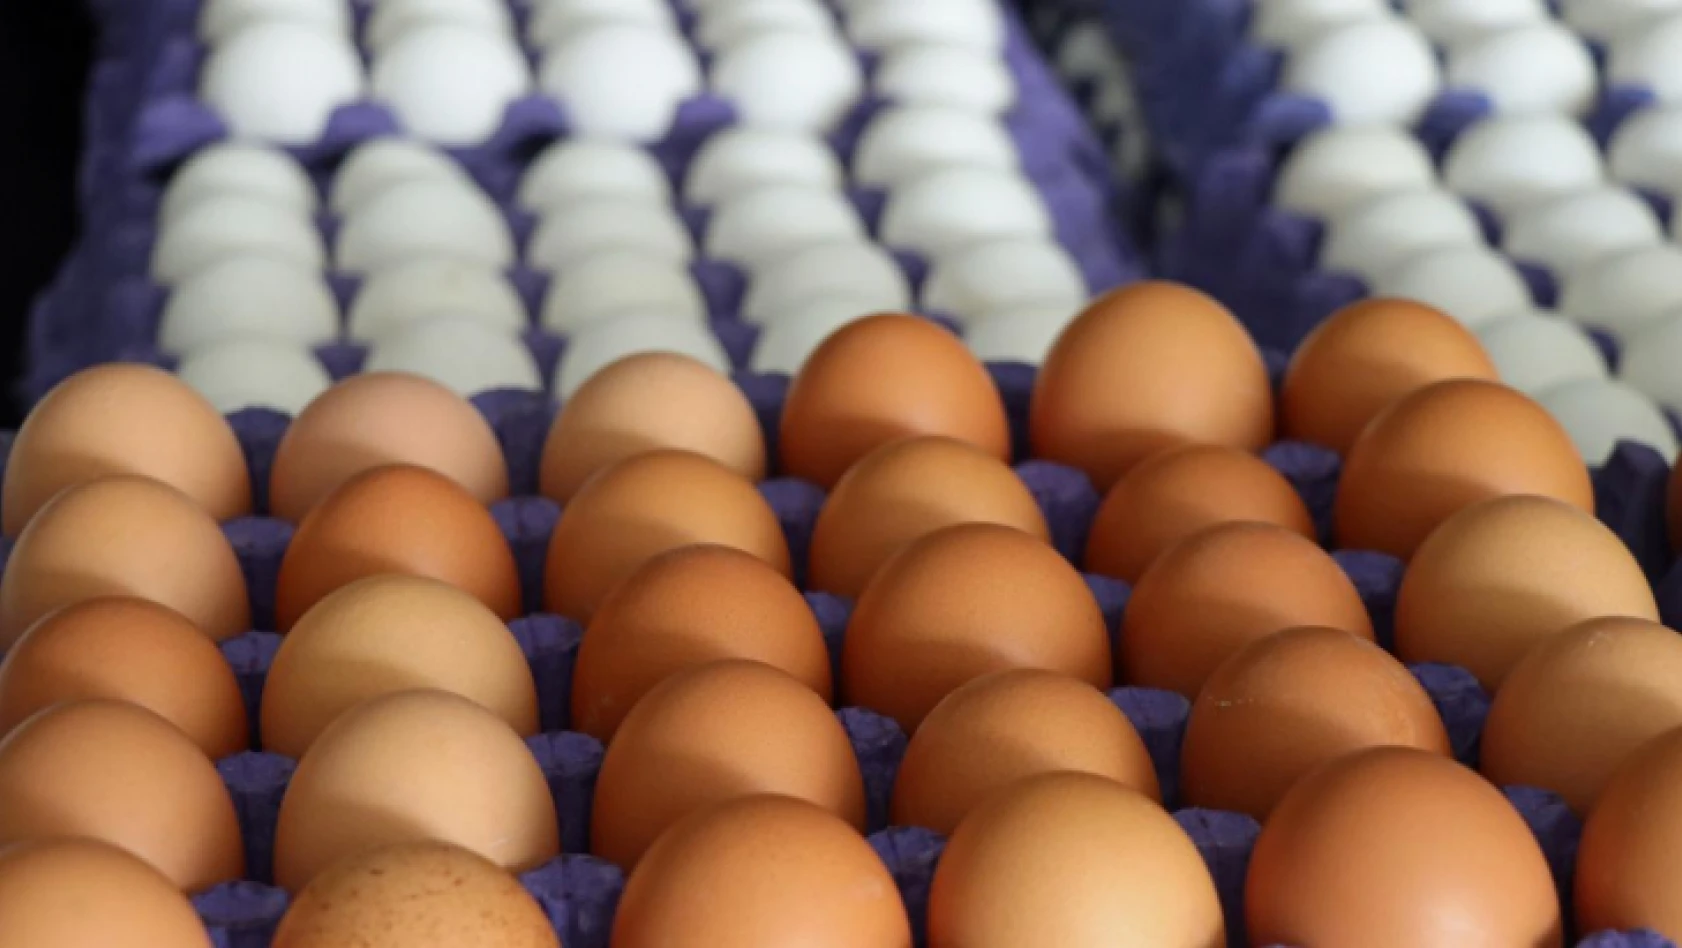 1,64 milyar adet yumurta ürettik